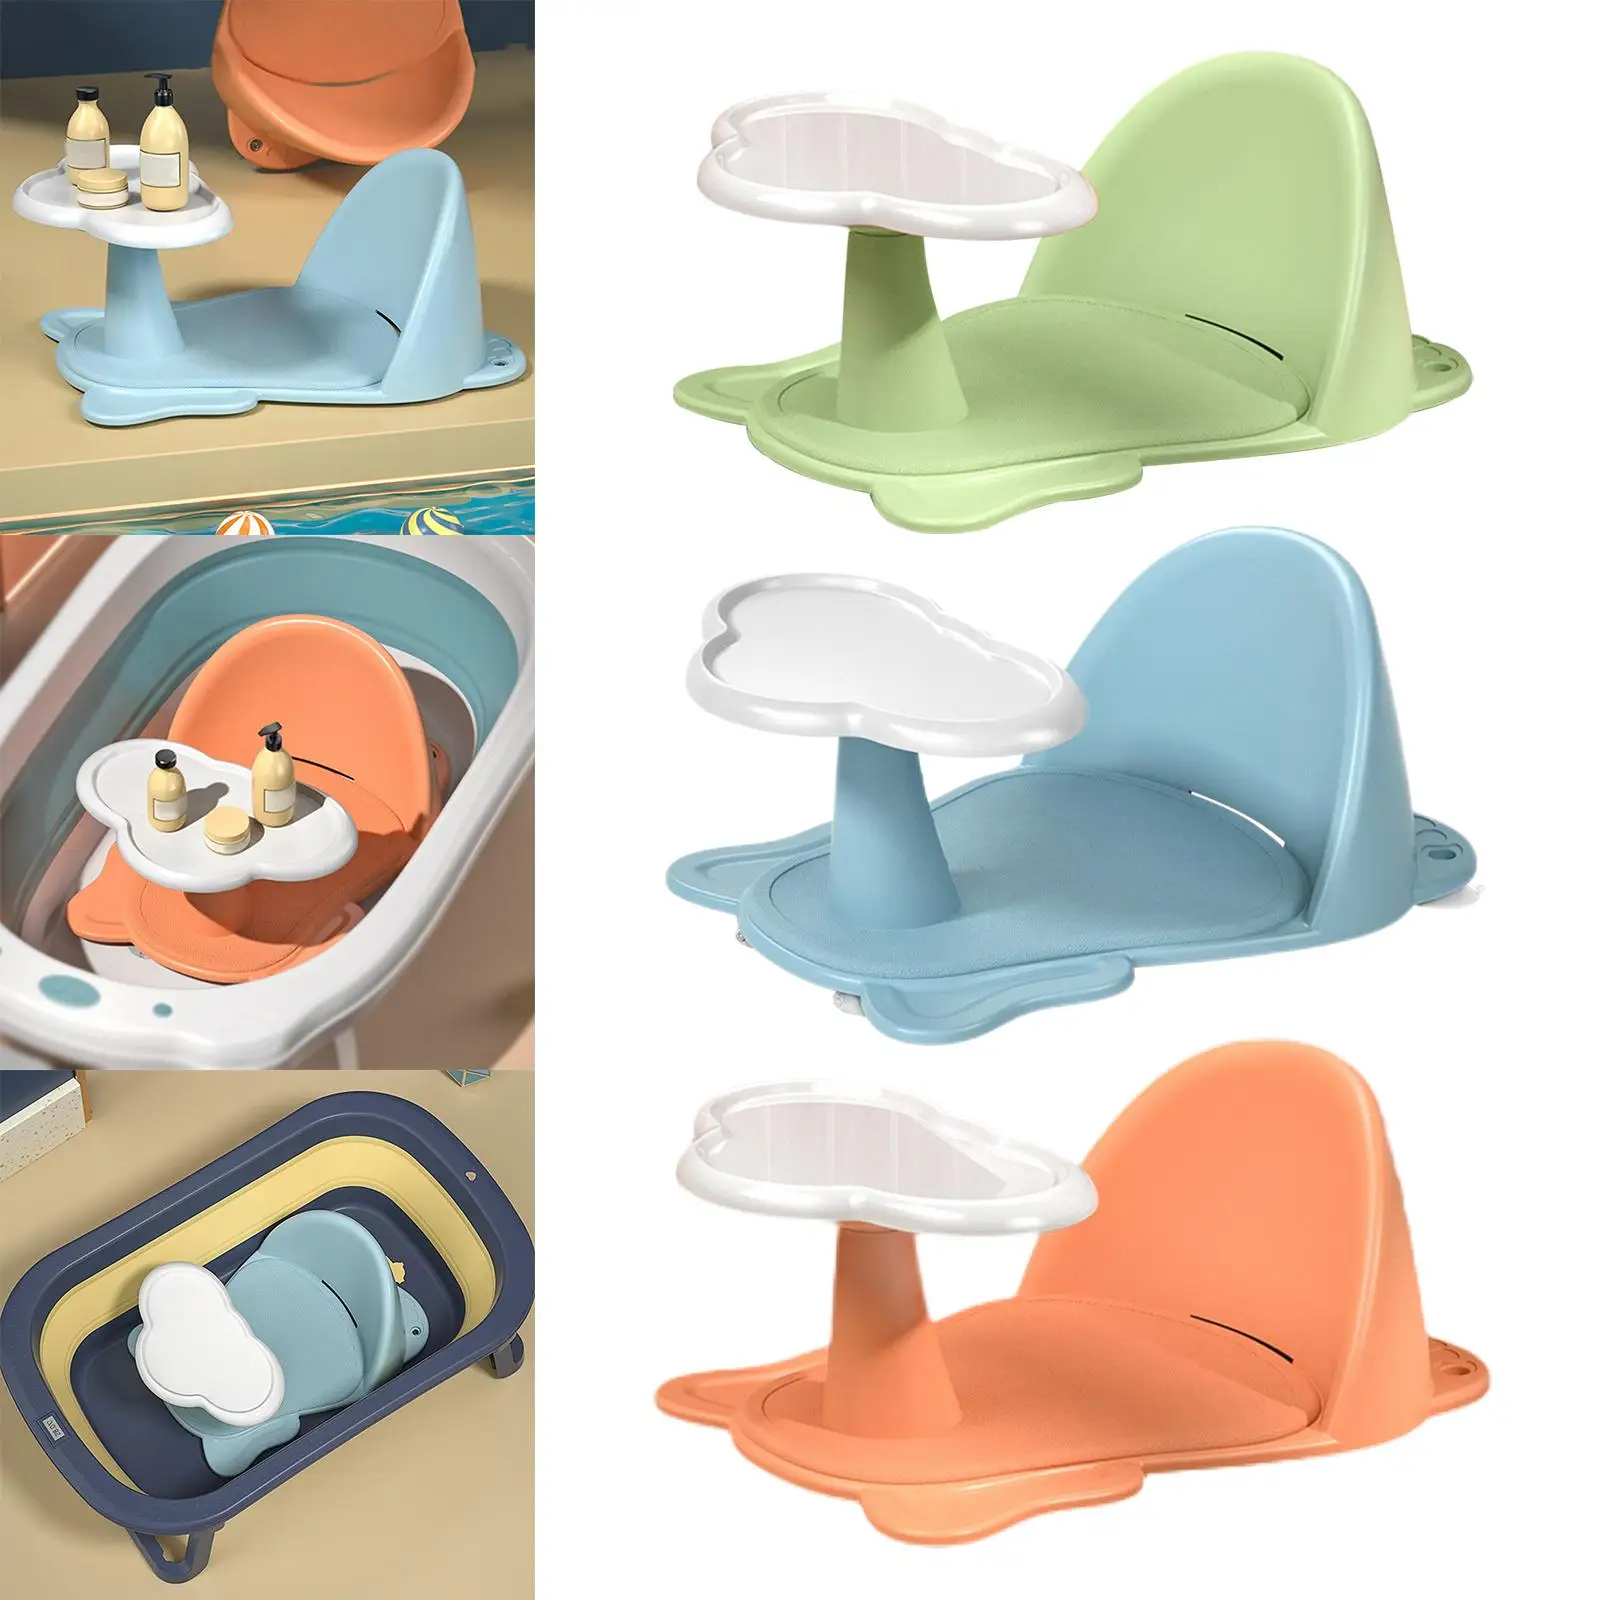 Cute Shape Baby Bathtub Seat Shower Seat Non Slip Steering Wheel Design Bath Tub Seat Bath Seat Support for Newborn 6-18 Months